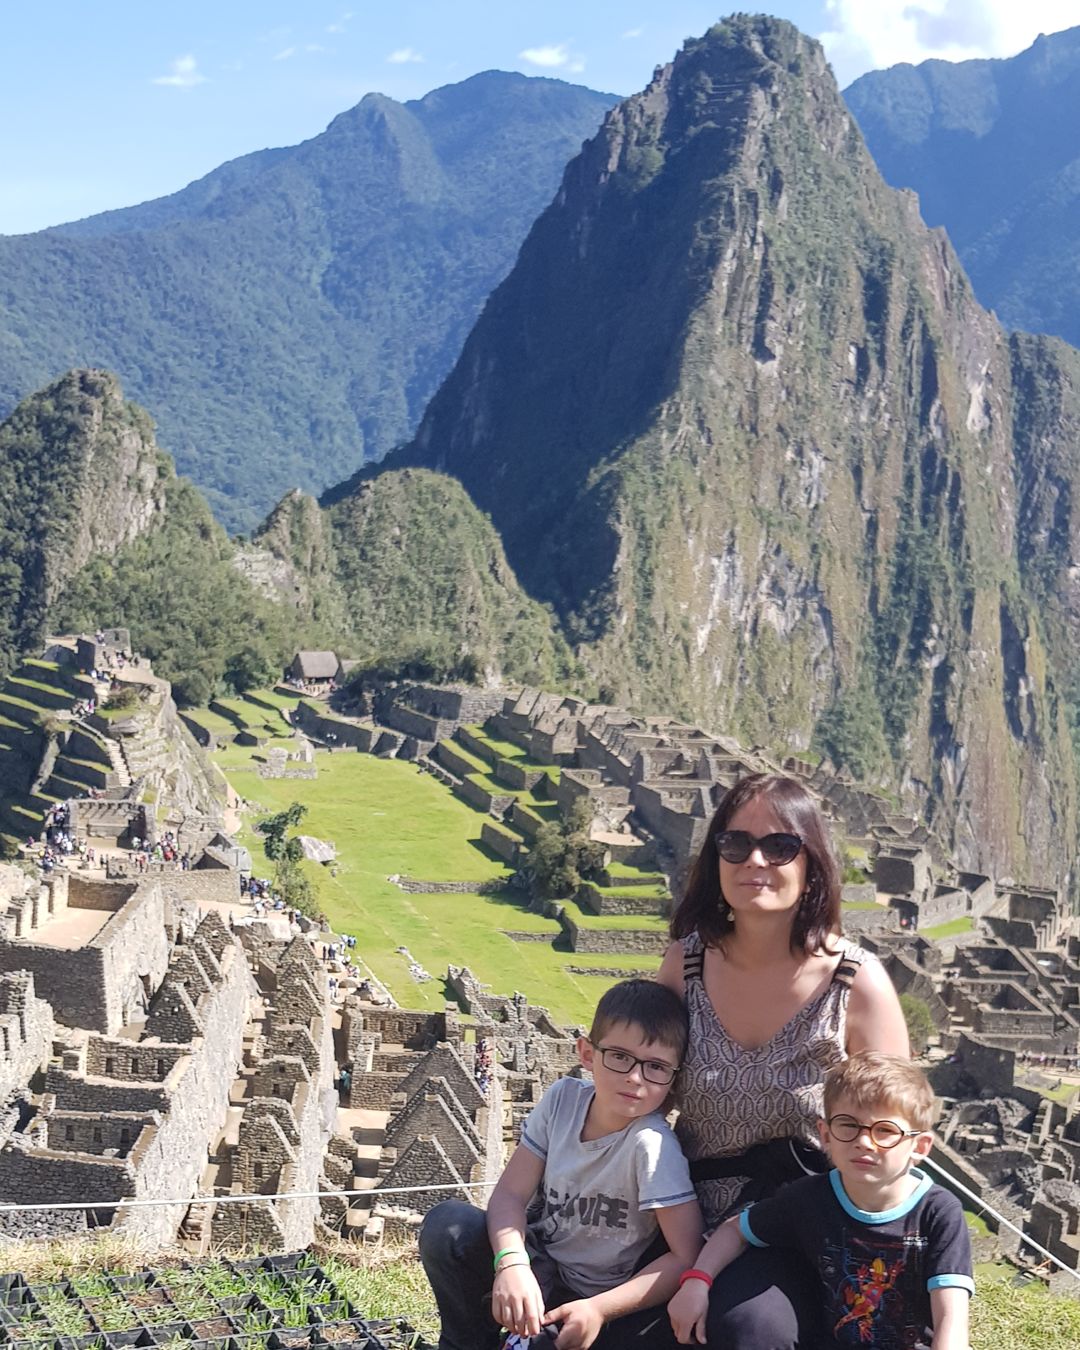 redactrice web seo freelance à Bordeaux en voyage au Machu Picchu